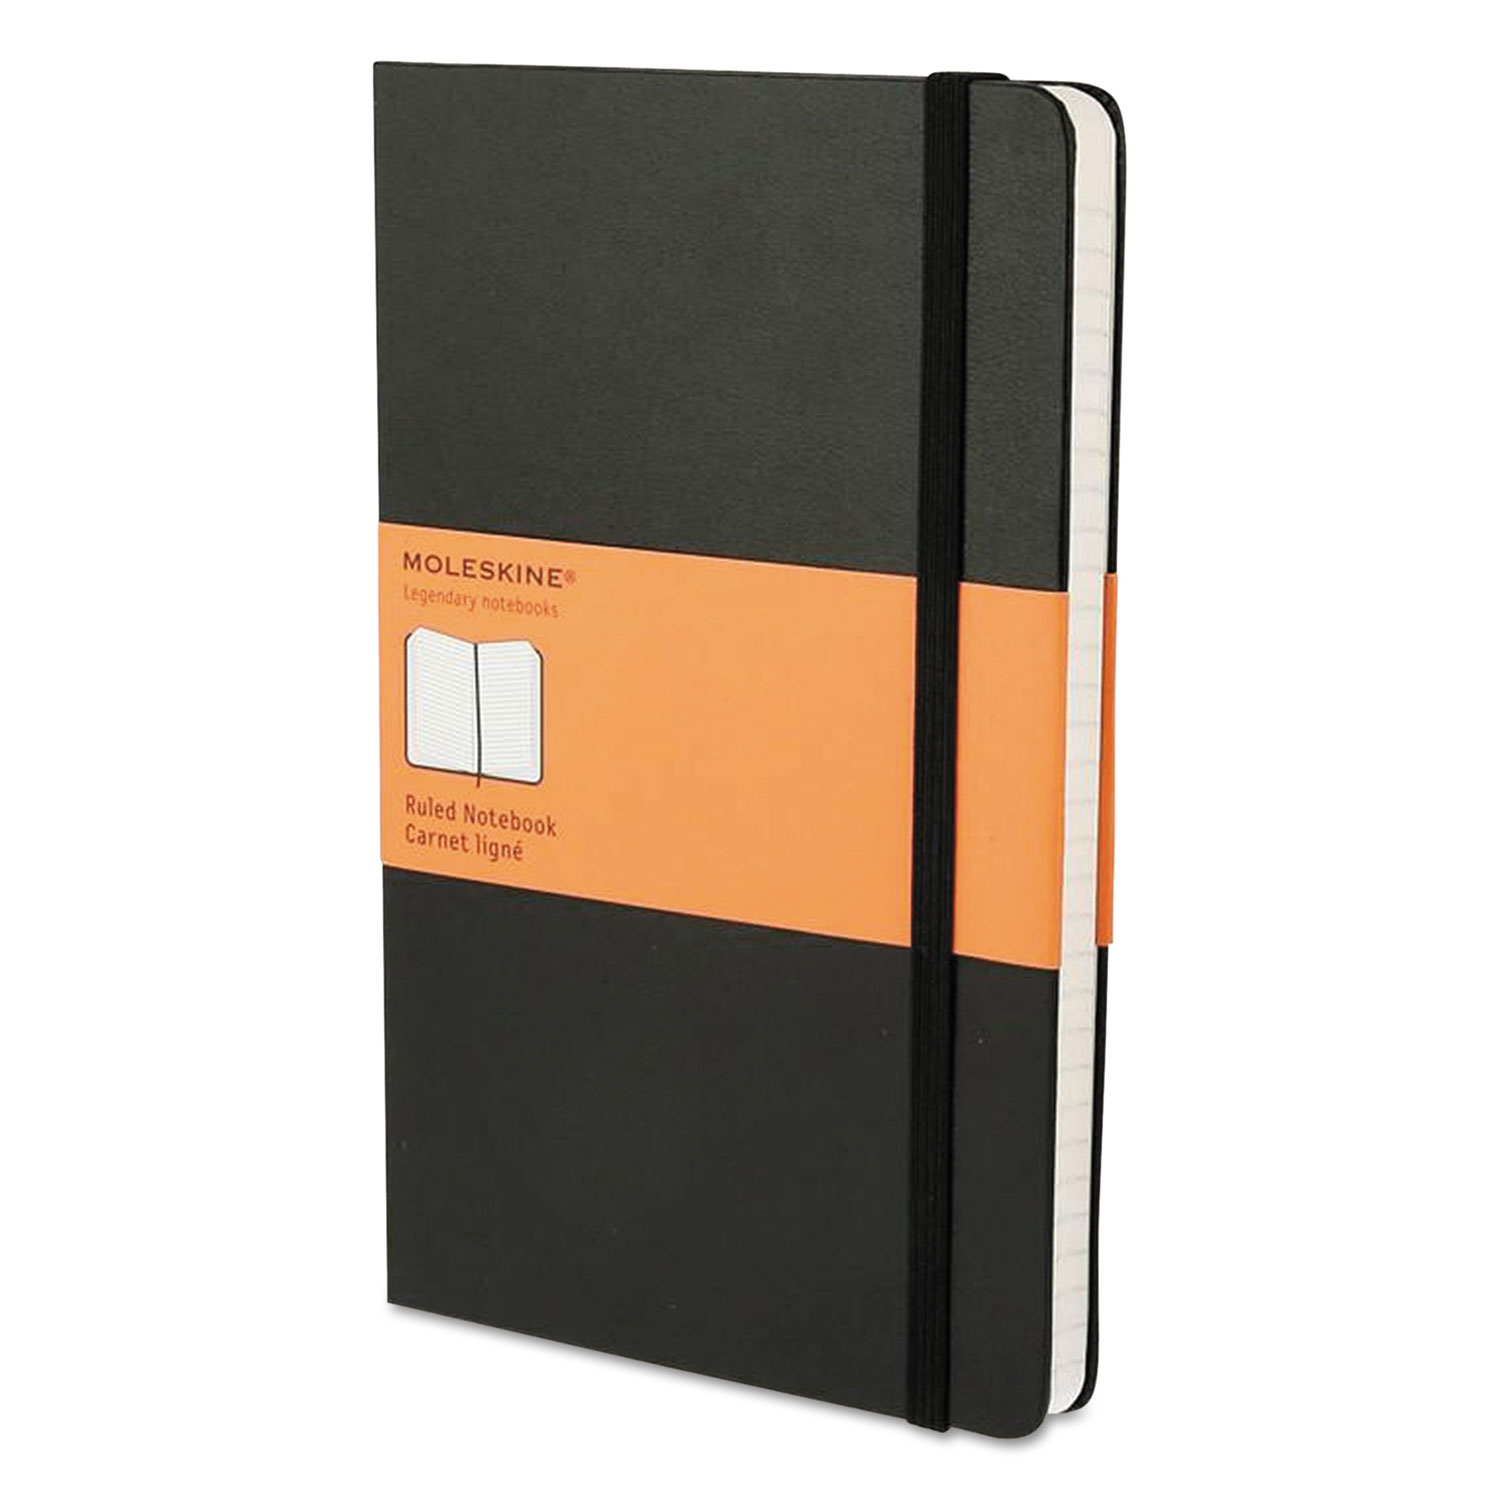  Moleskine 9788883701122 Hard Cover Notebook, Narrow Rule, Black Cover, 8.25 x 5, 192 Sheets (HBGMBL14) 